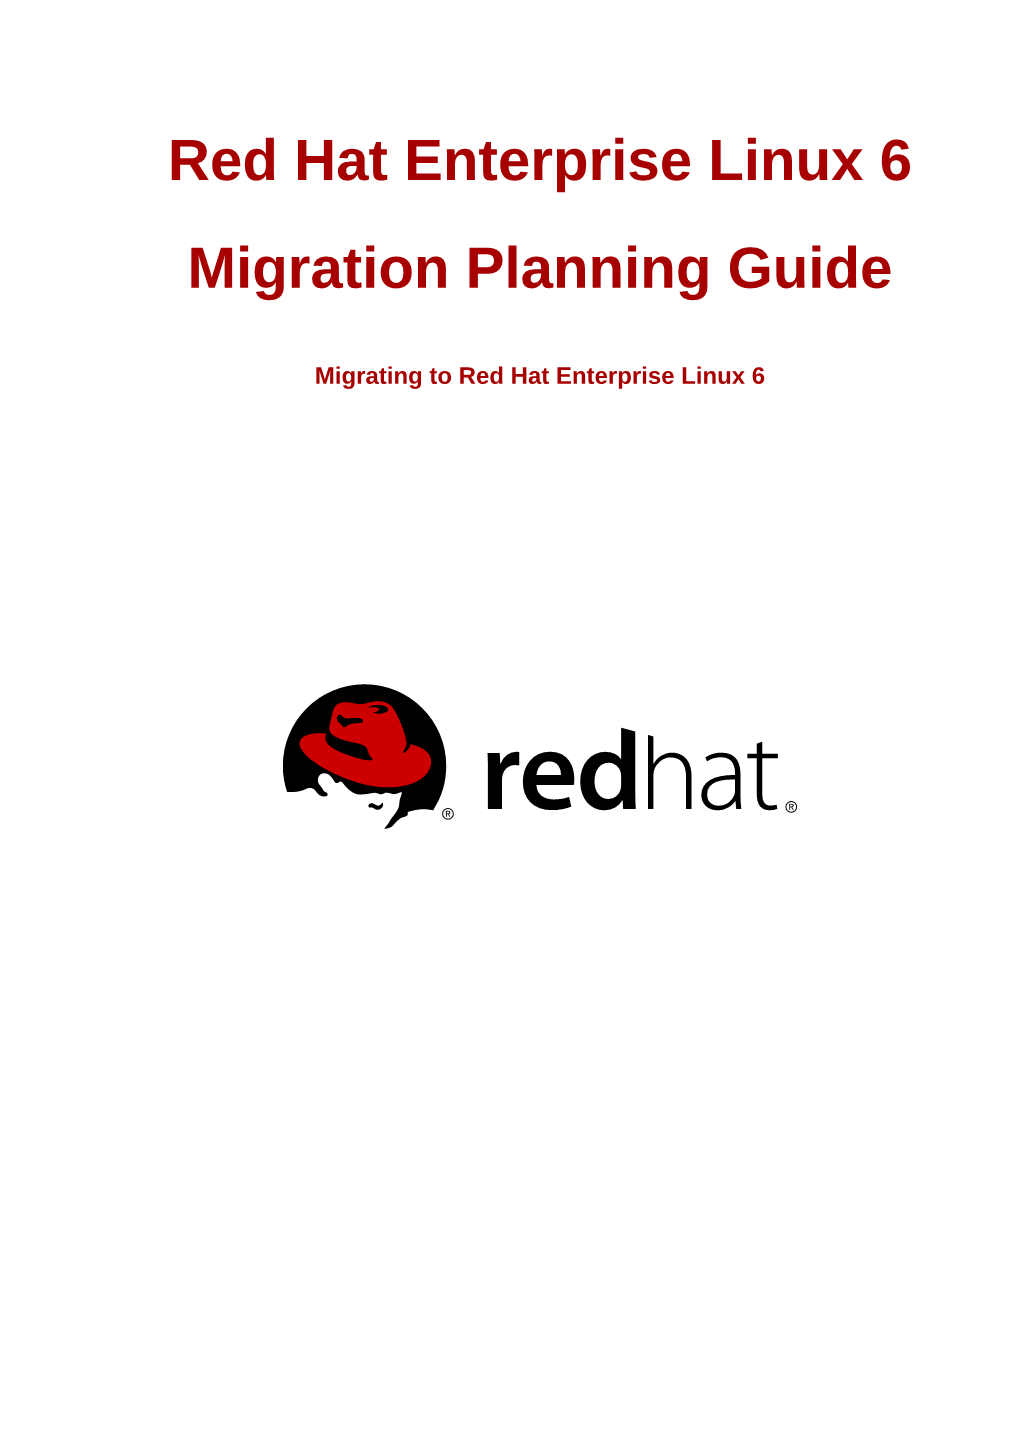 Migration Planning Guide